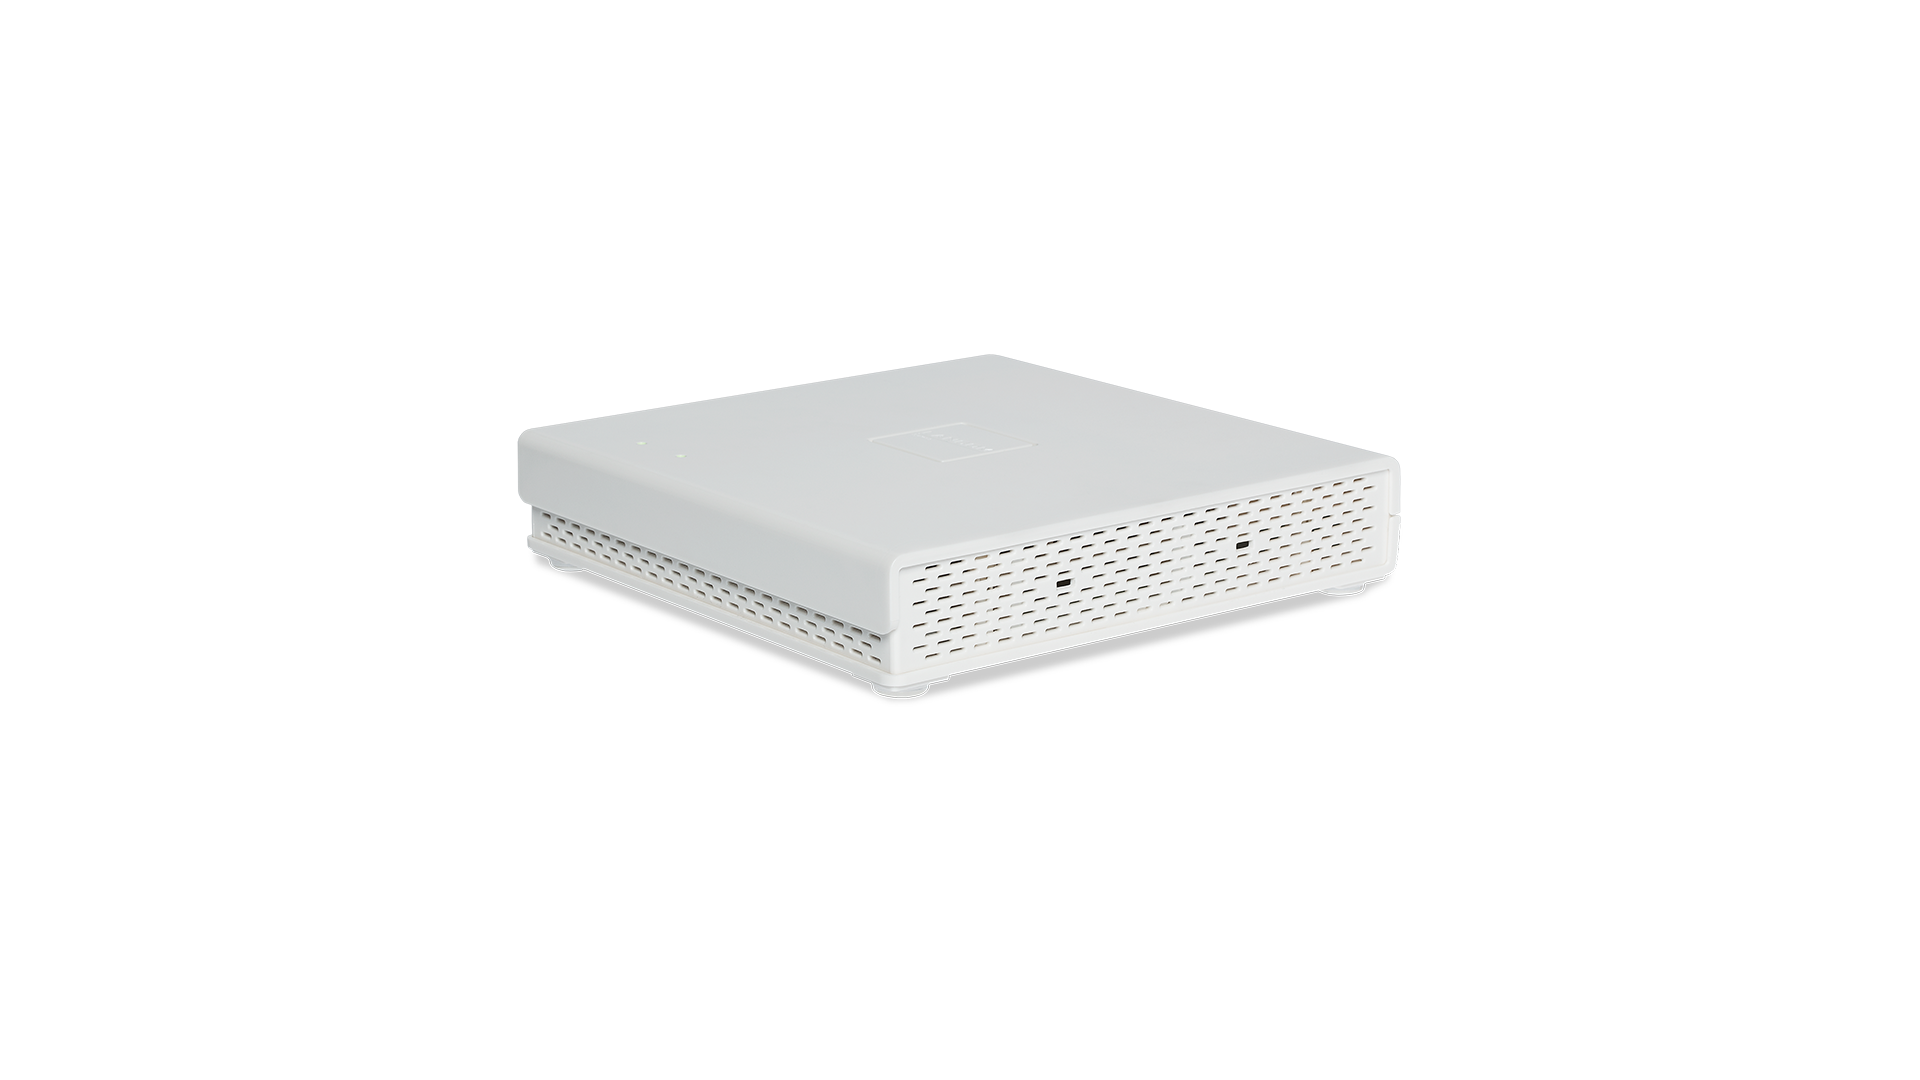 White square access point LANCOM LX-6500E side view